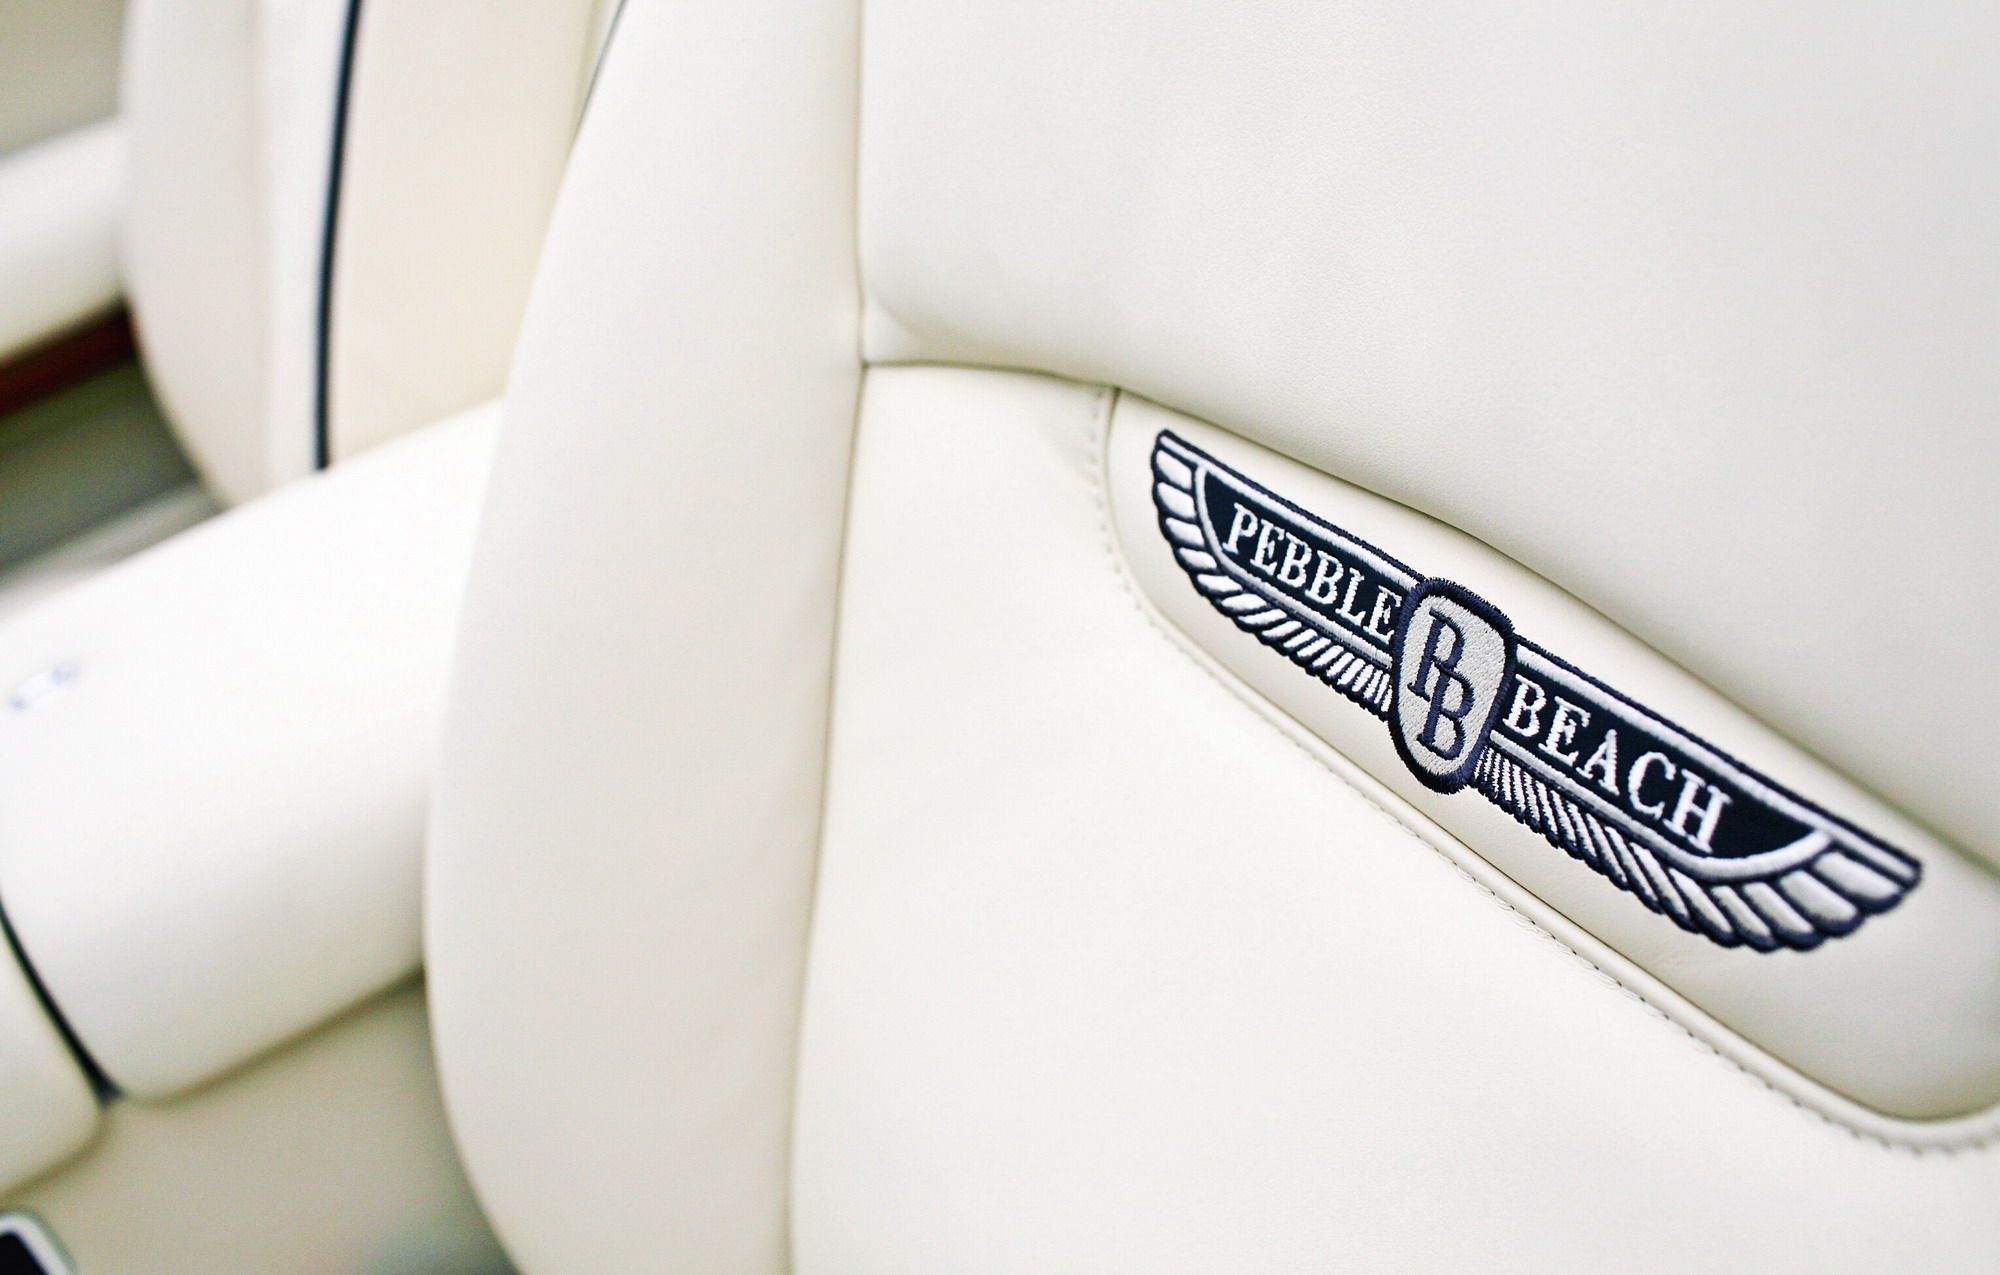 2010 Rolls Royce Phantom Drophead Coupe Pebble Beach 60th anniversary edition